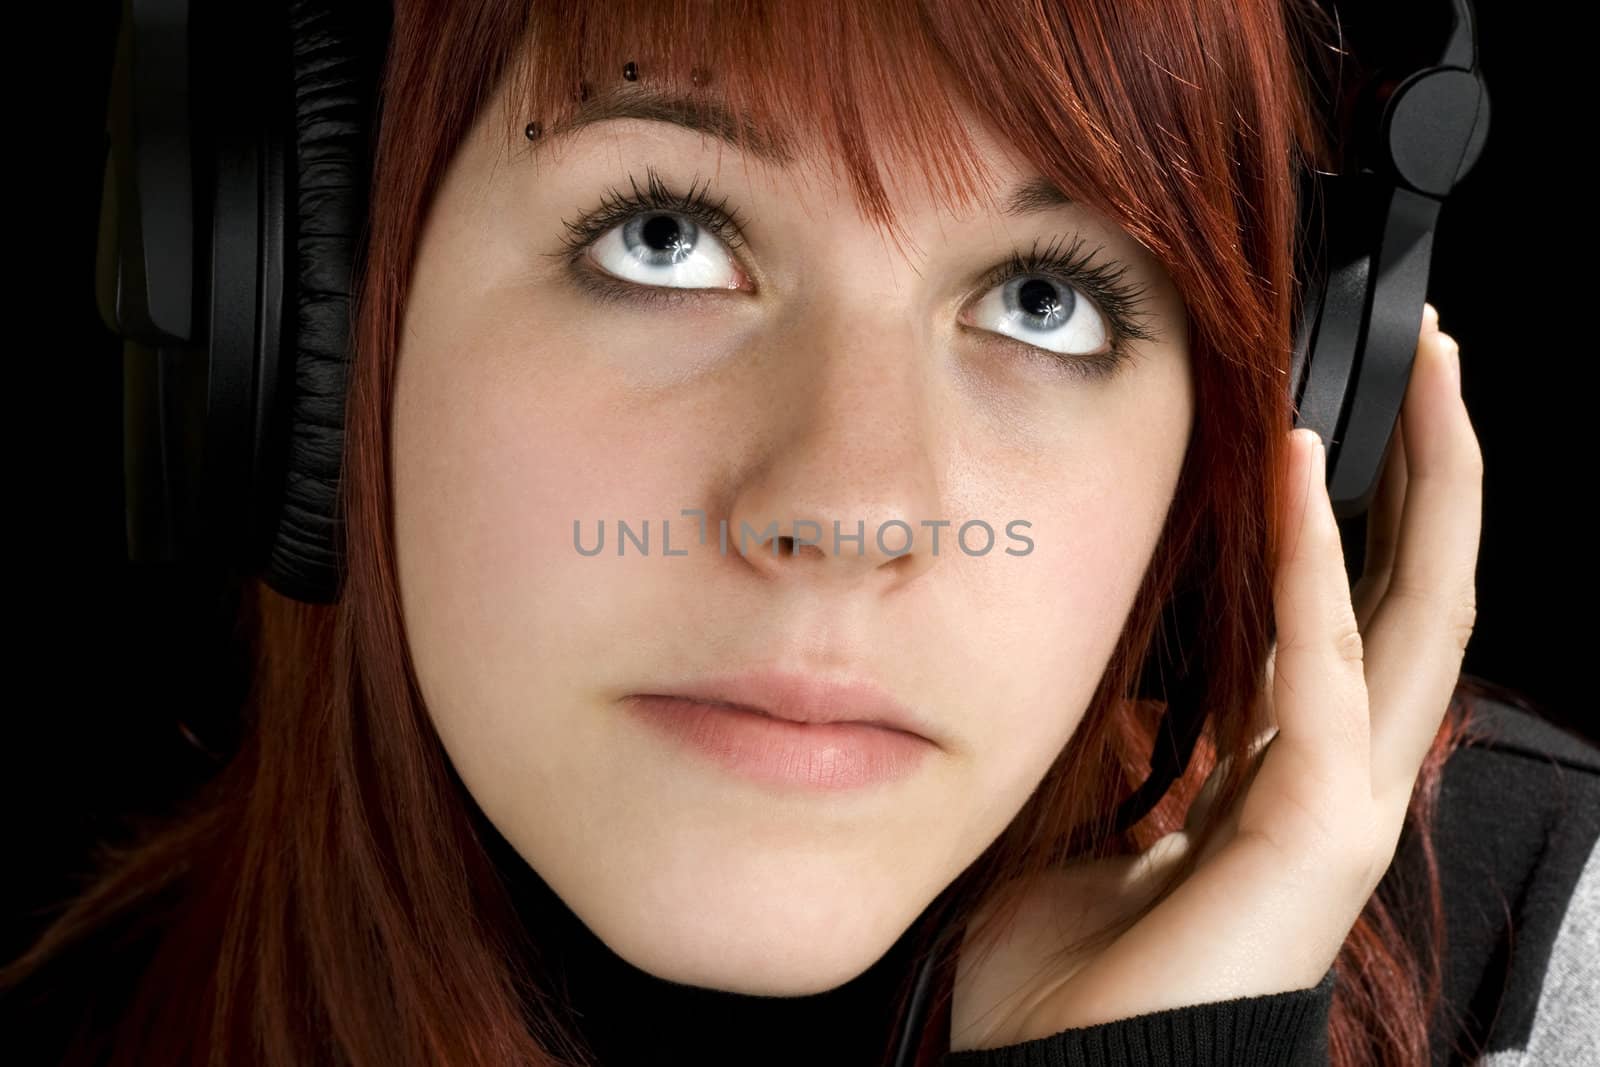 Pensive redhead girl listening to music and enjoying it (looking up, thinking).

Studio shot.